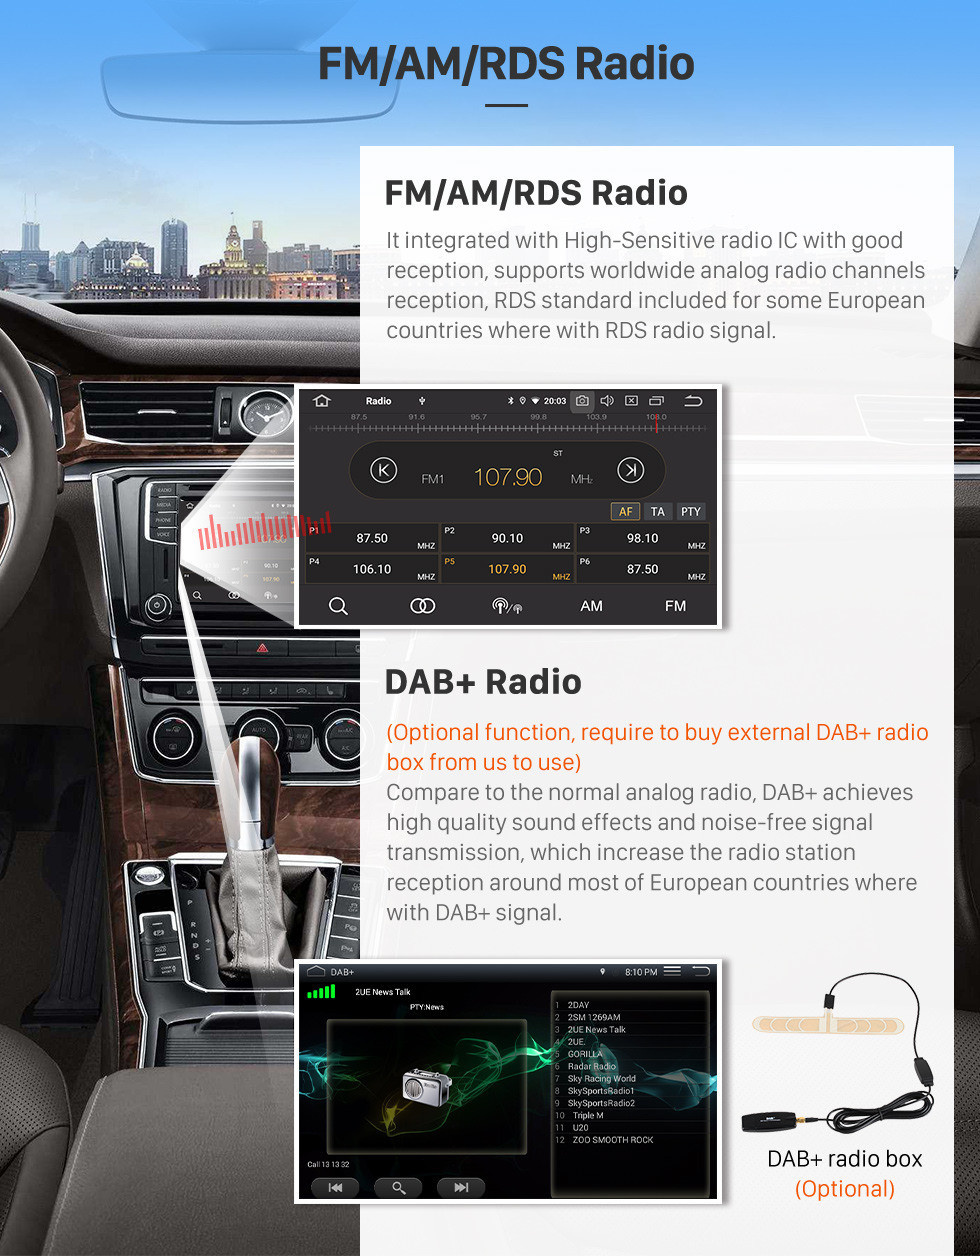 Seicane 10.1 pulgadas 2011-2014 Nissan Tiida Auto A / C Android 11.0 Navegación GPS Radio Bluetooth HD Pantalla táctil AUX USB WIFI Carplay soporte OBD2 1080P